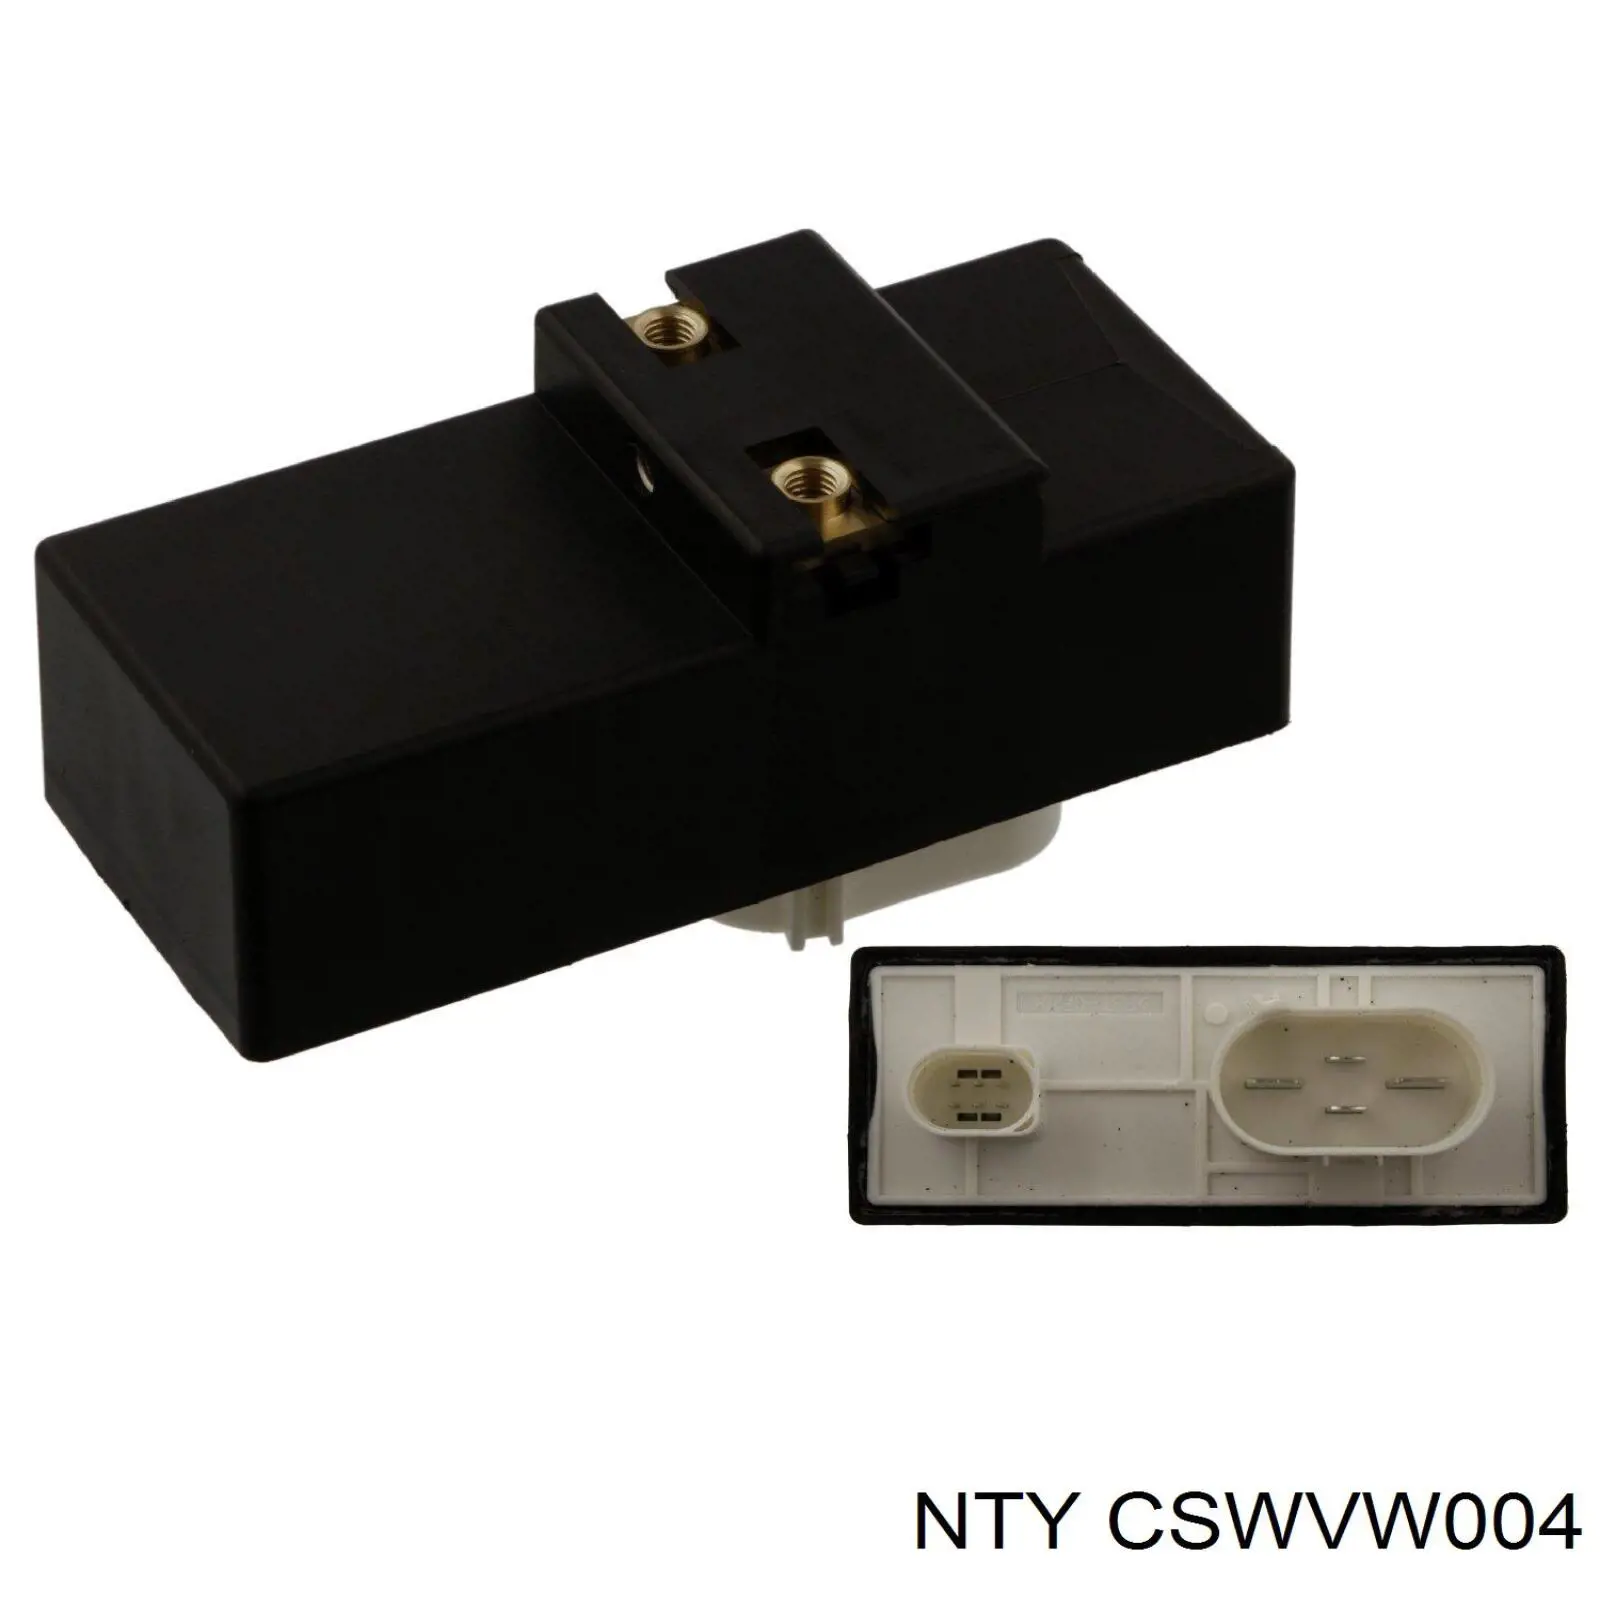 Регулятор оборотов вентилятора охлаждения (блок управления) NTY CSWVW004